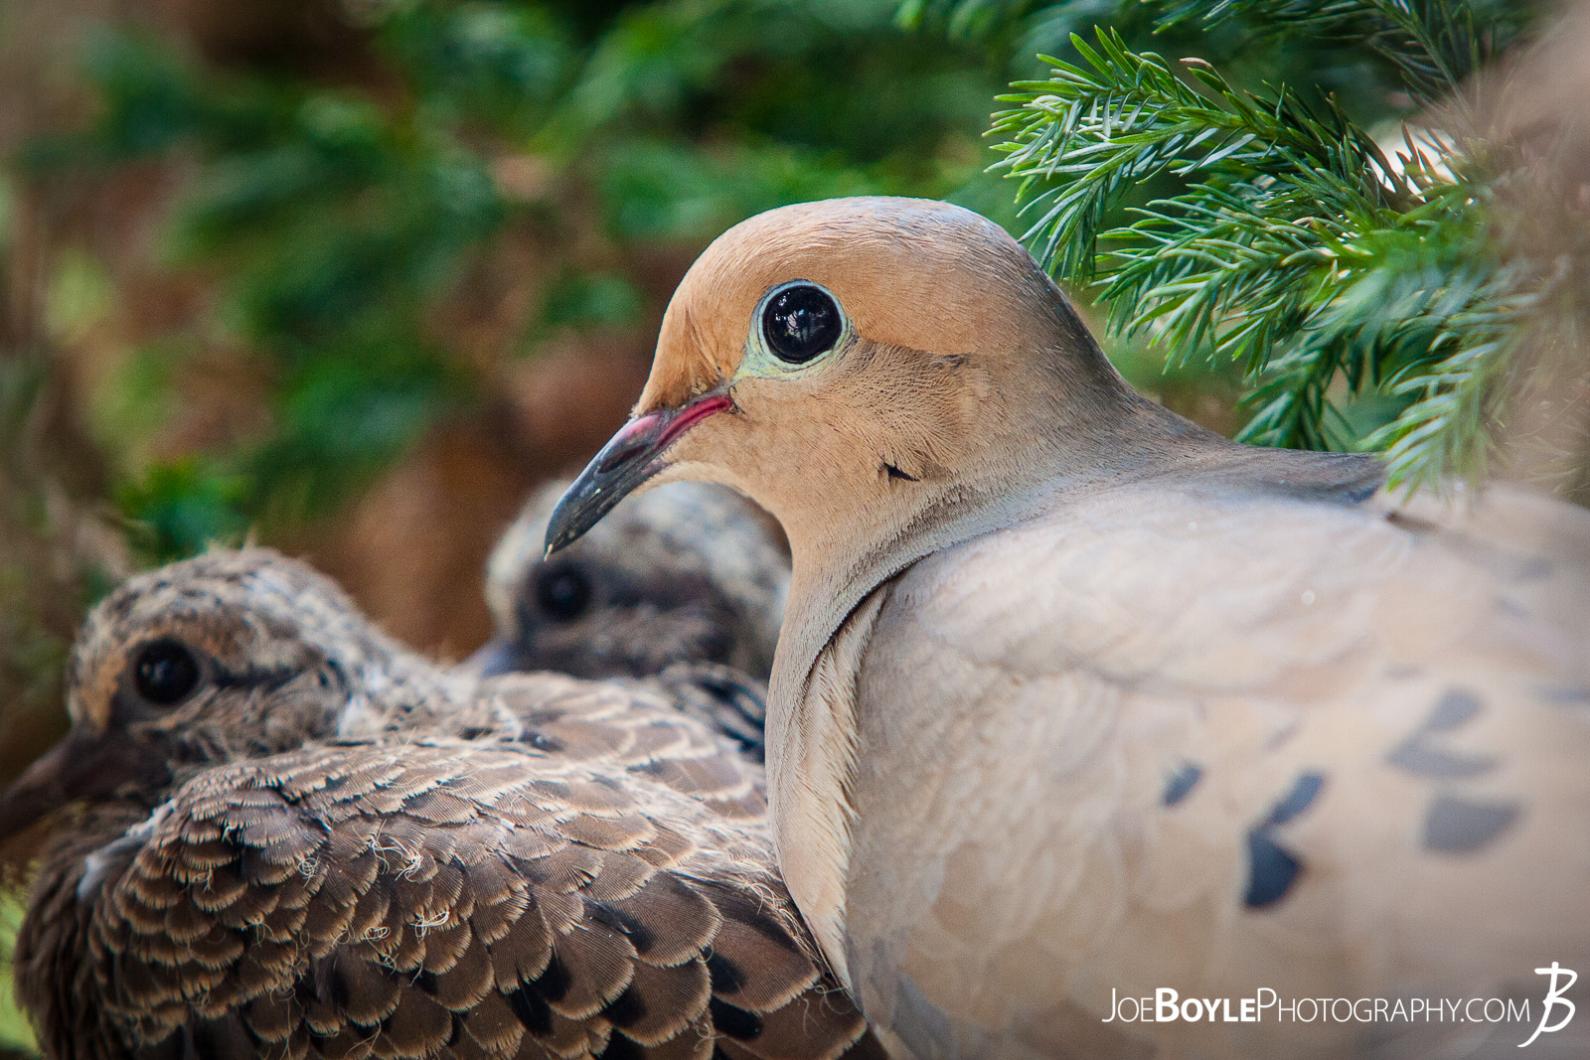 birds-in-nest-close-up